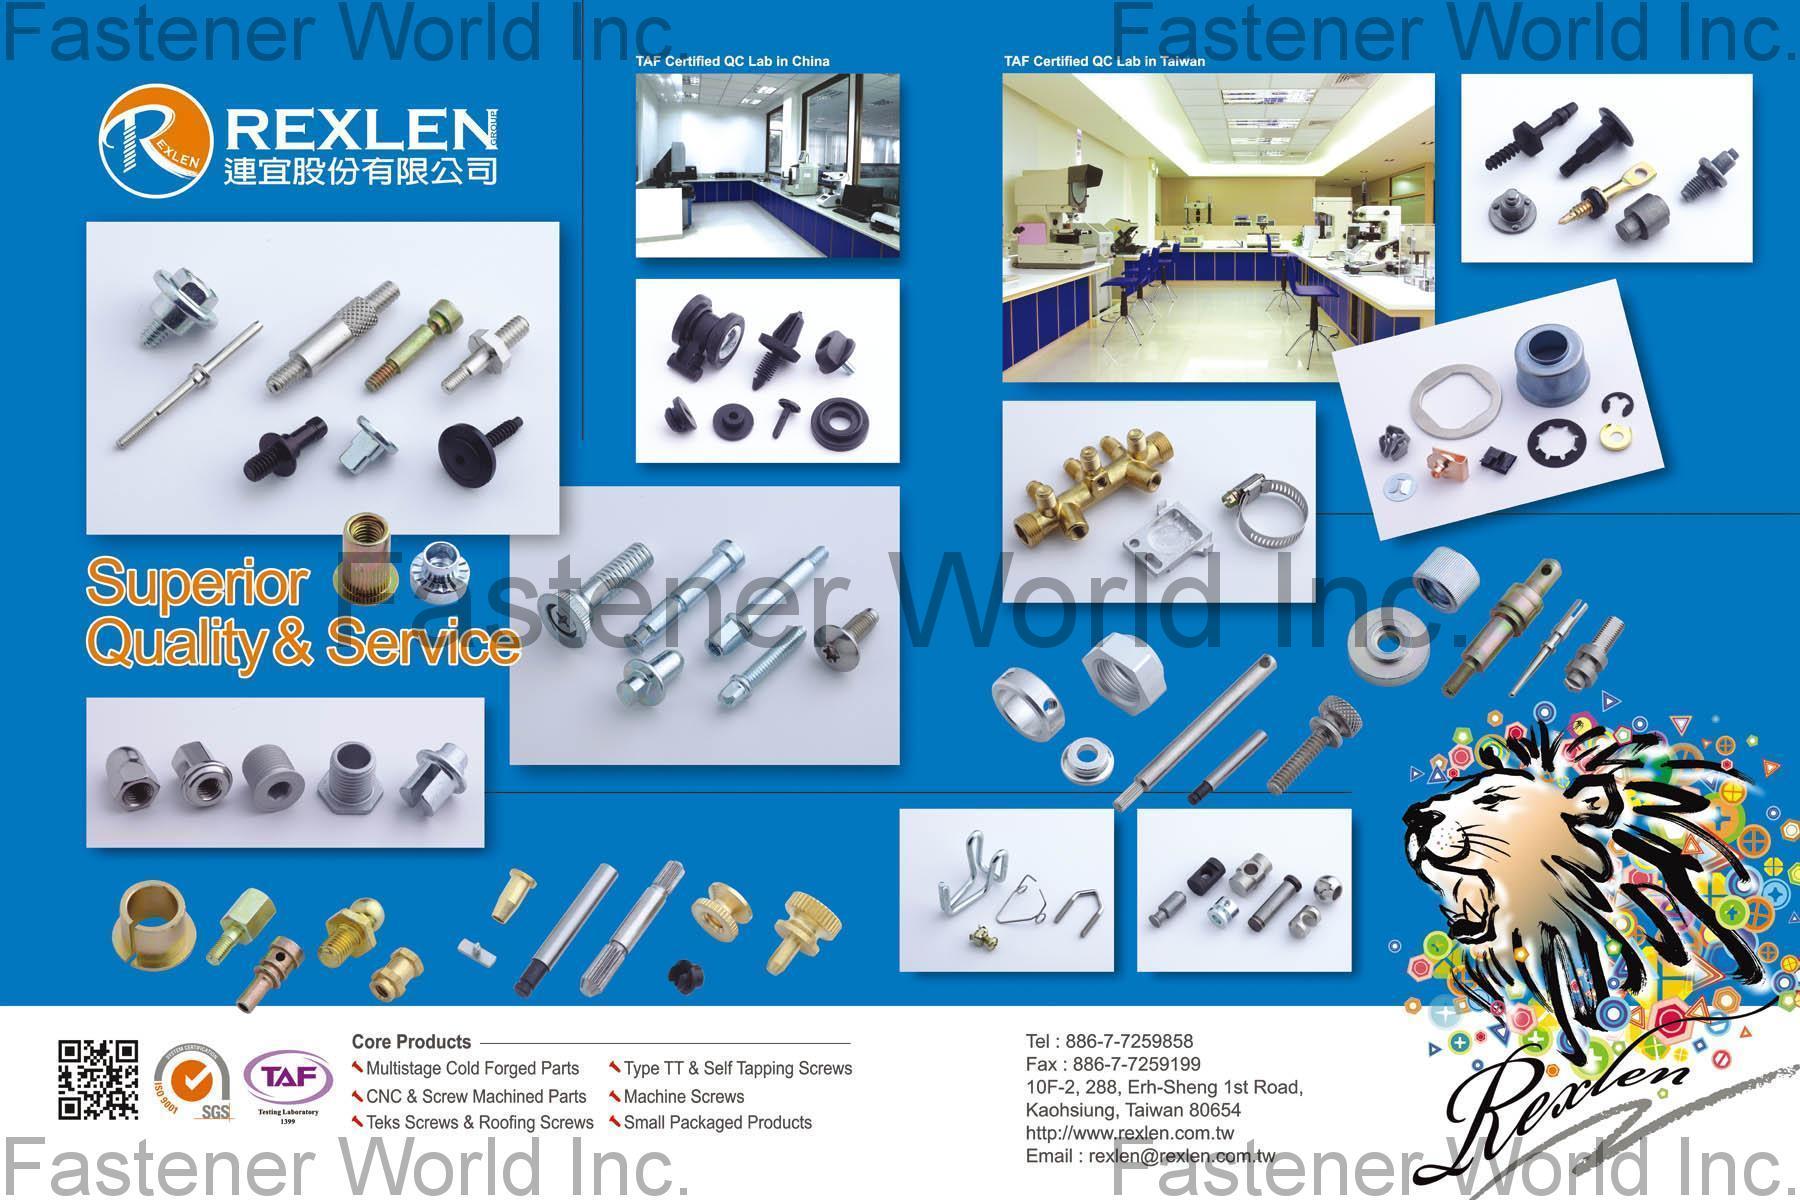 REXLEN CORP.  , Type TT & Self Tapping Screws, Machine Screws, Small Packaged Products, Teks Screws , Machine Screws